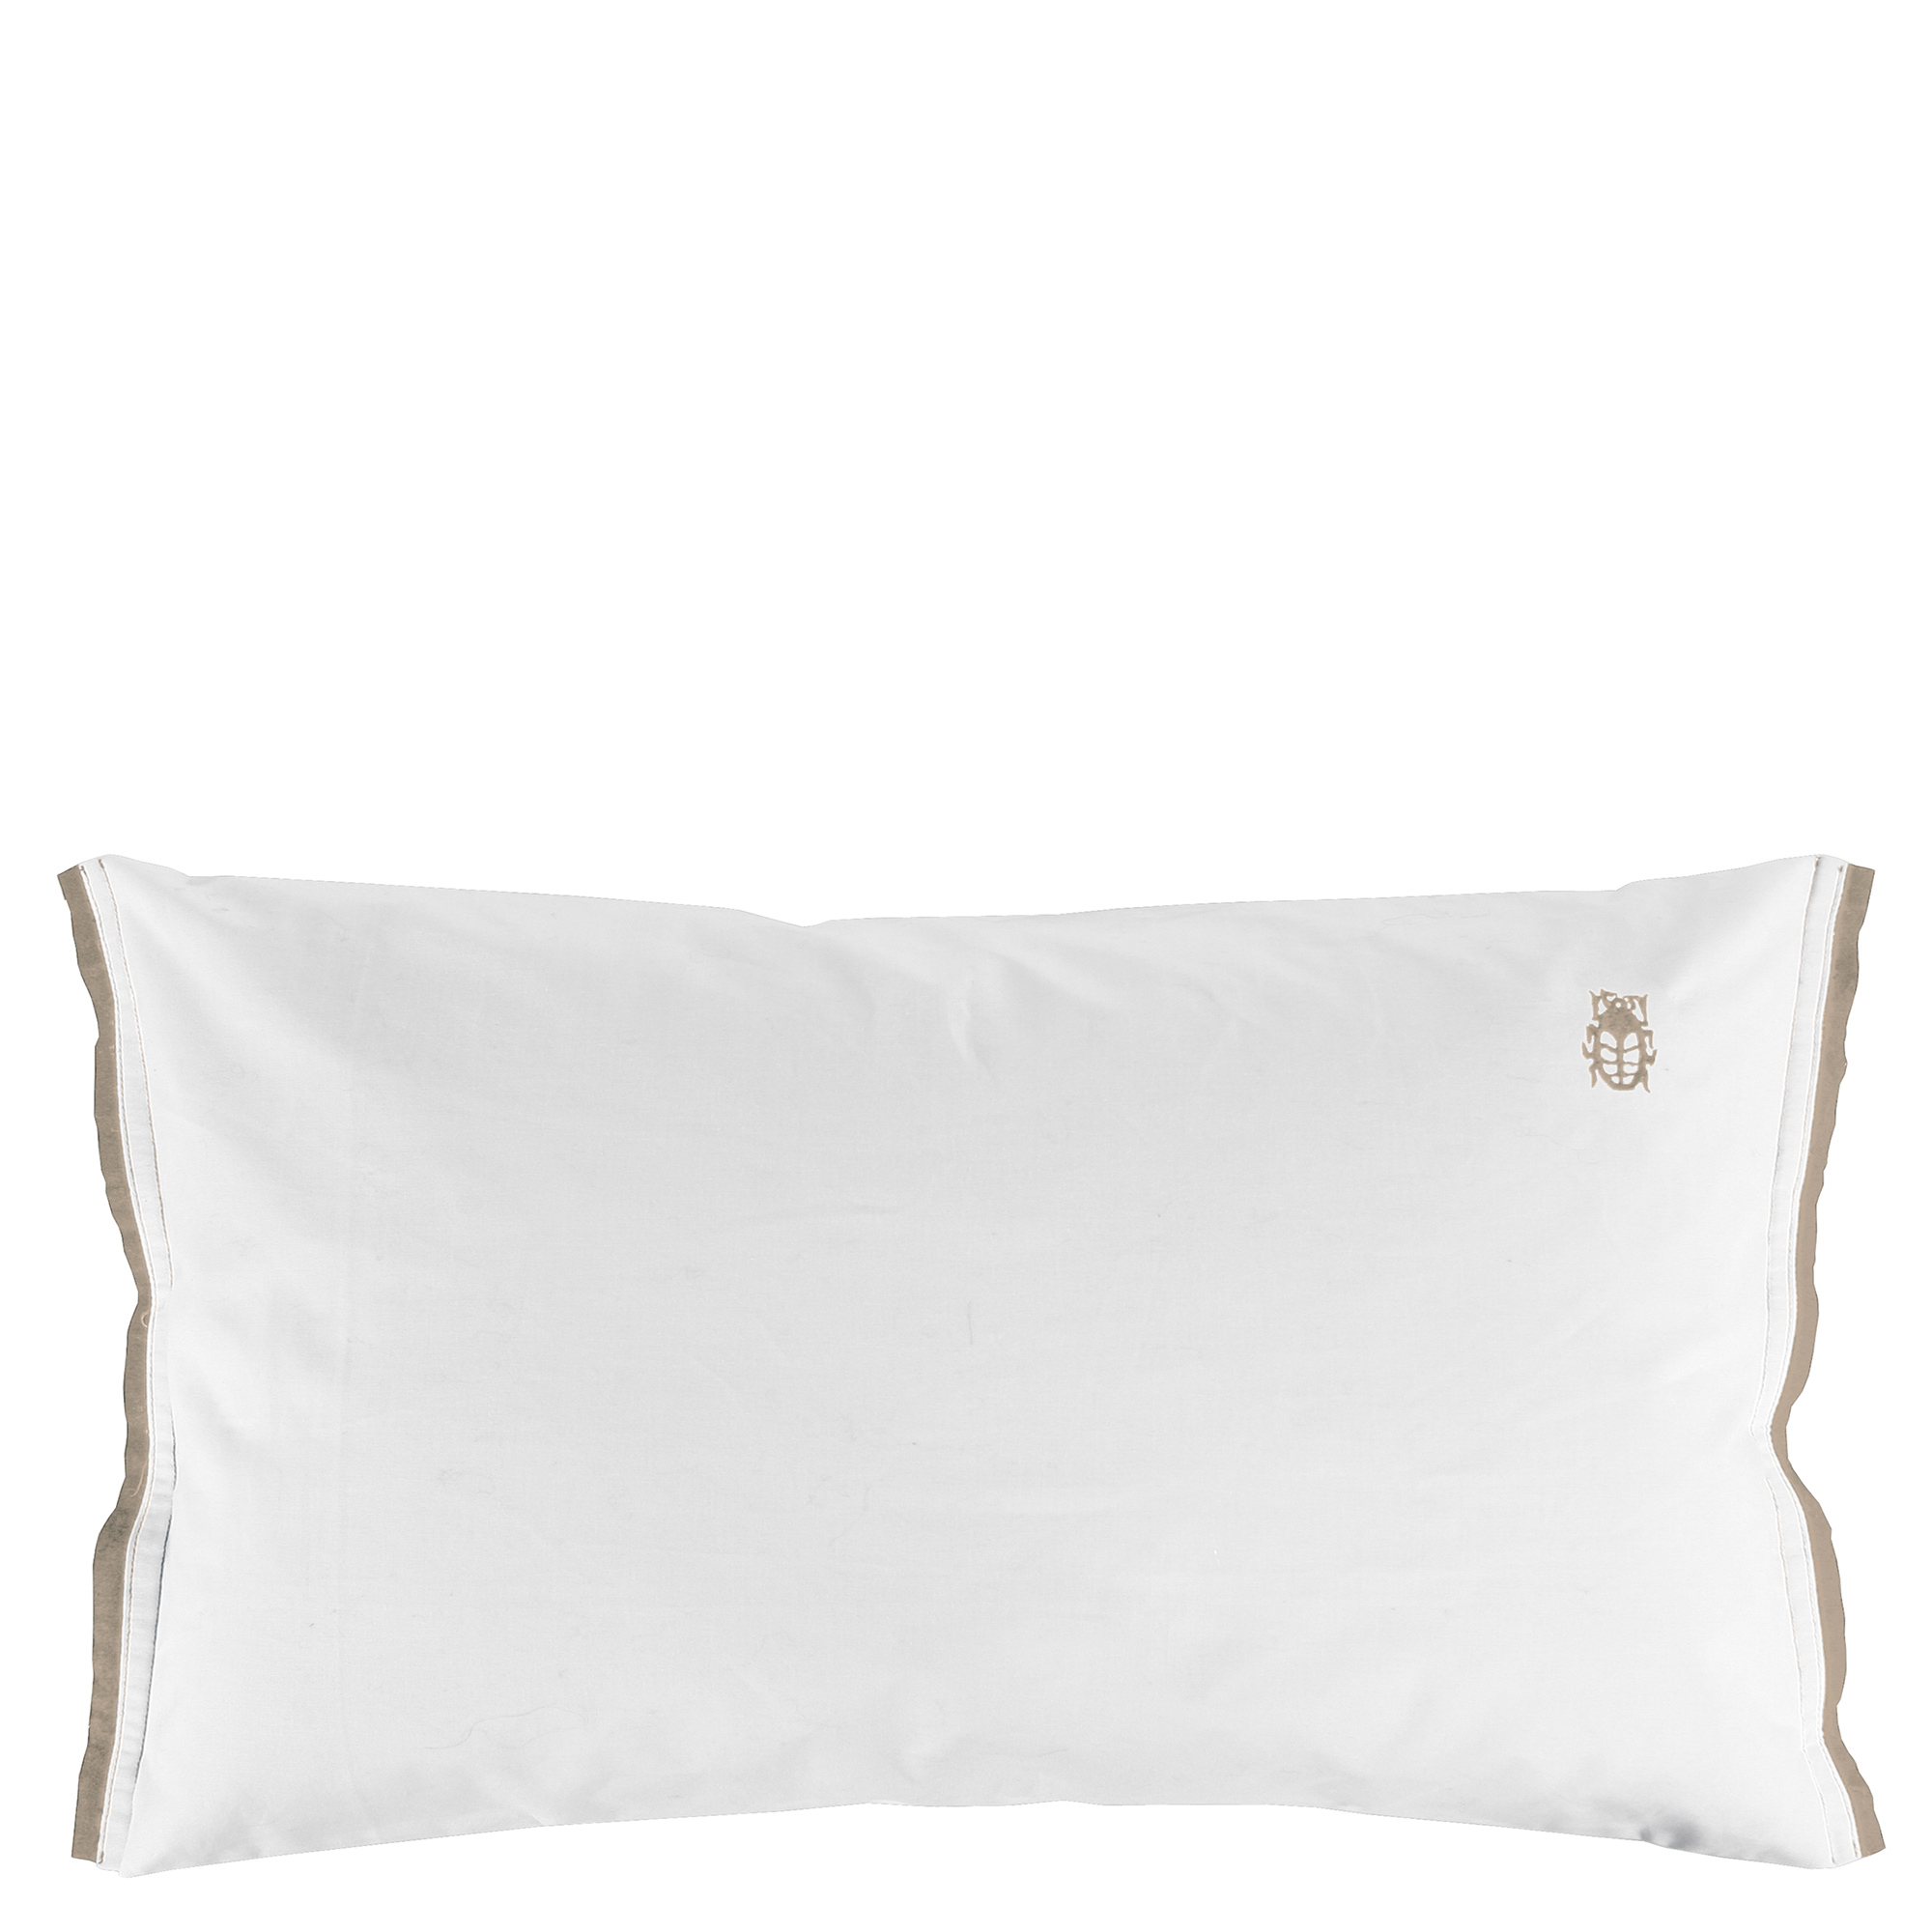 zoeppritz White Kissenbezug, Farbe weiss mit braun, Material Baumwolle Perkal in Groesse 60x90